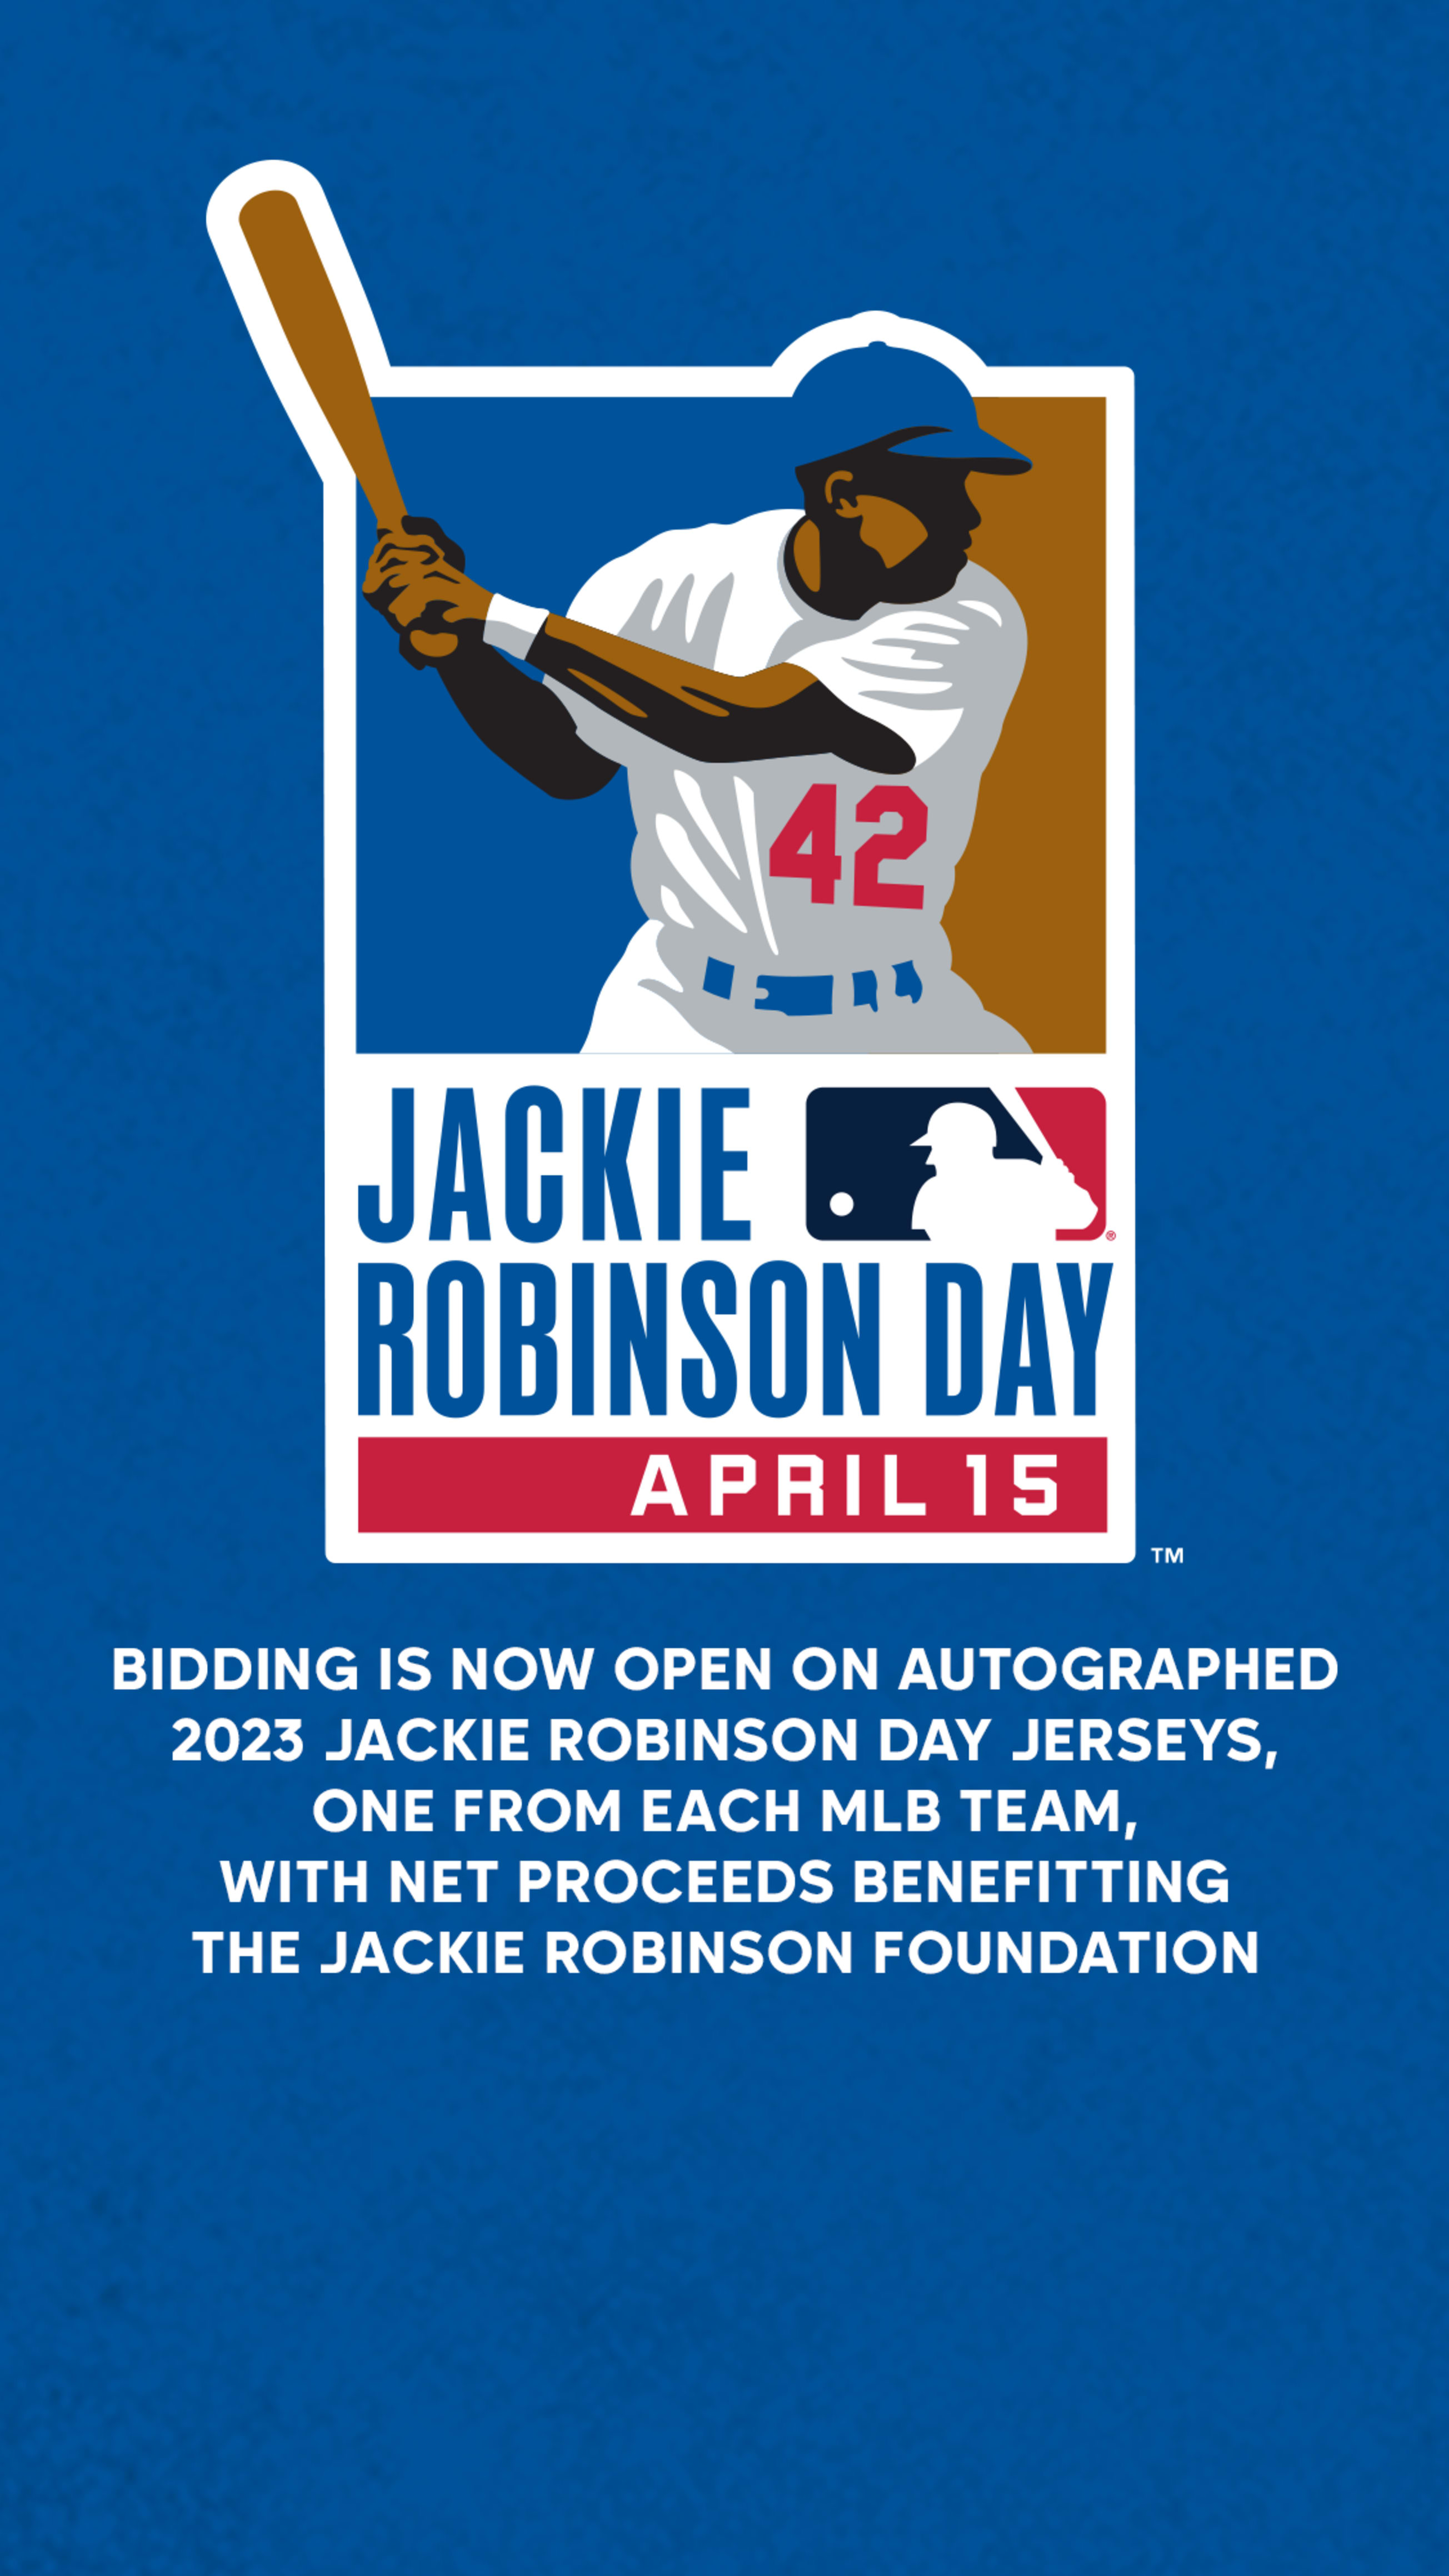 MLB Stories - Jackie Robinson bio career highlights